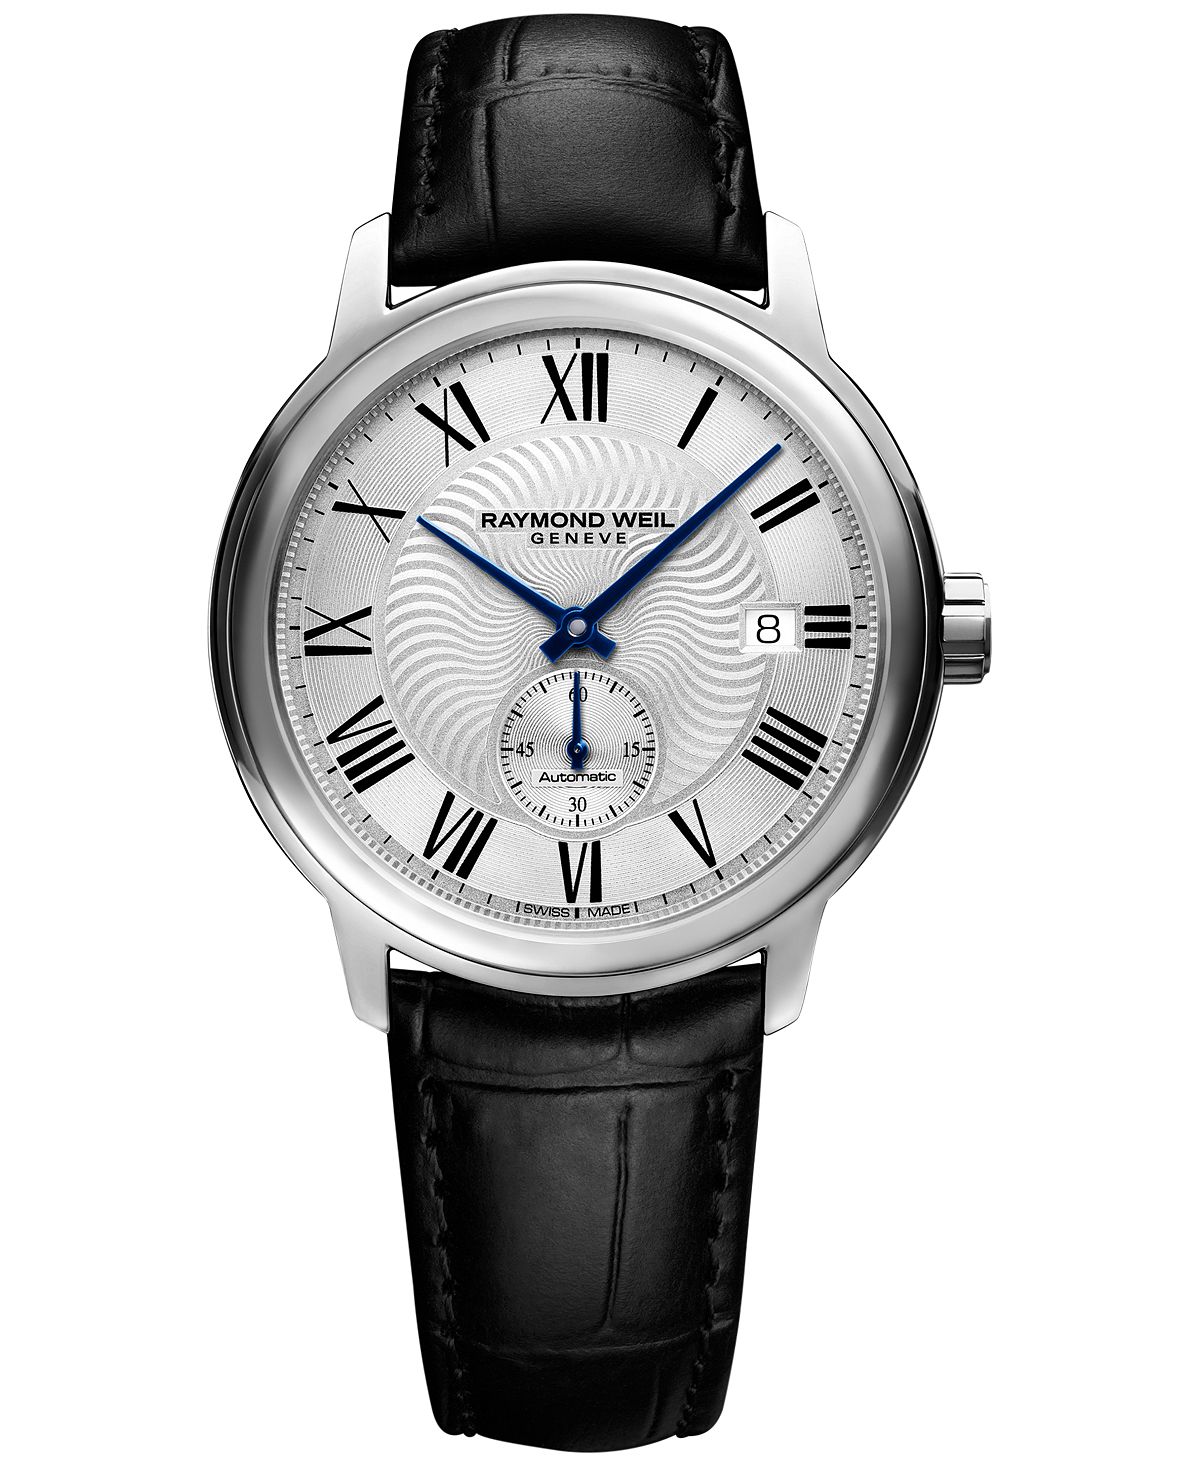 Мужские швейцарские автоматические часы Maestro с черным кожаным ремешком, 40 мм 2238-STC-00659 Raymond Weil часы raymond weil 2239 pc5 00659